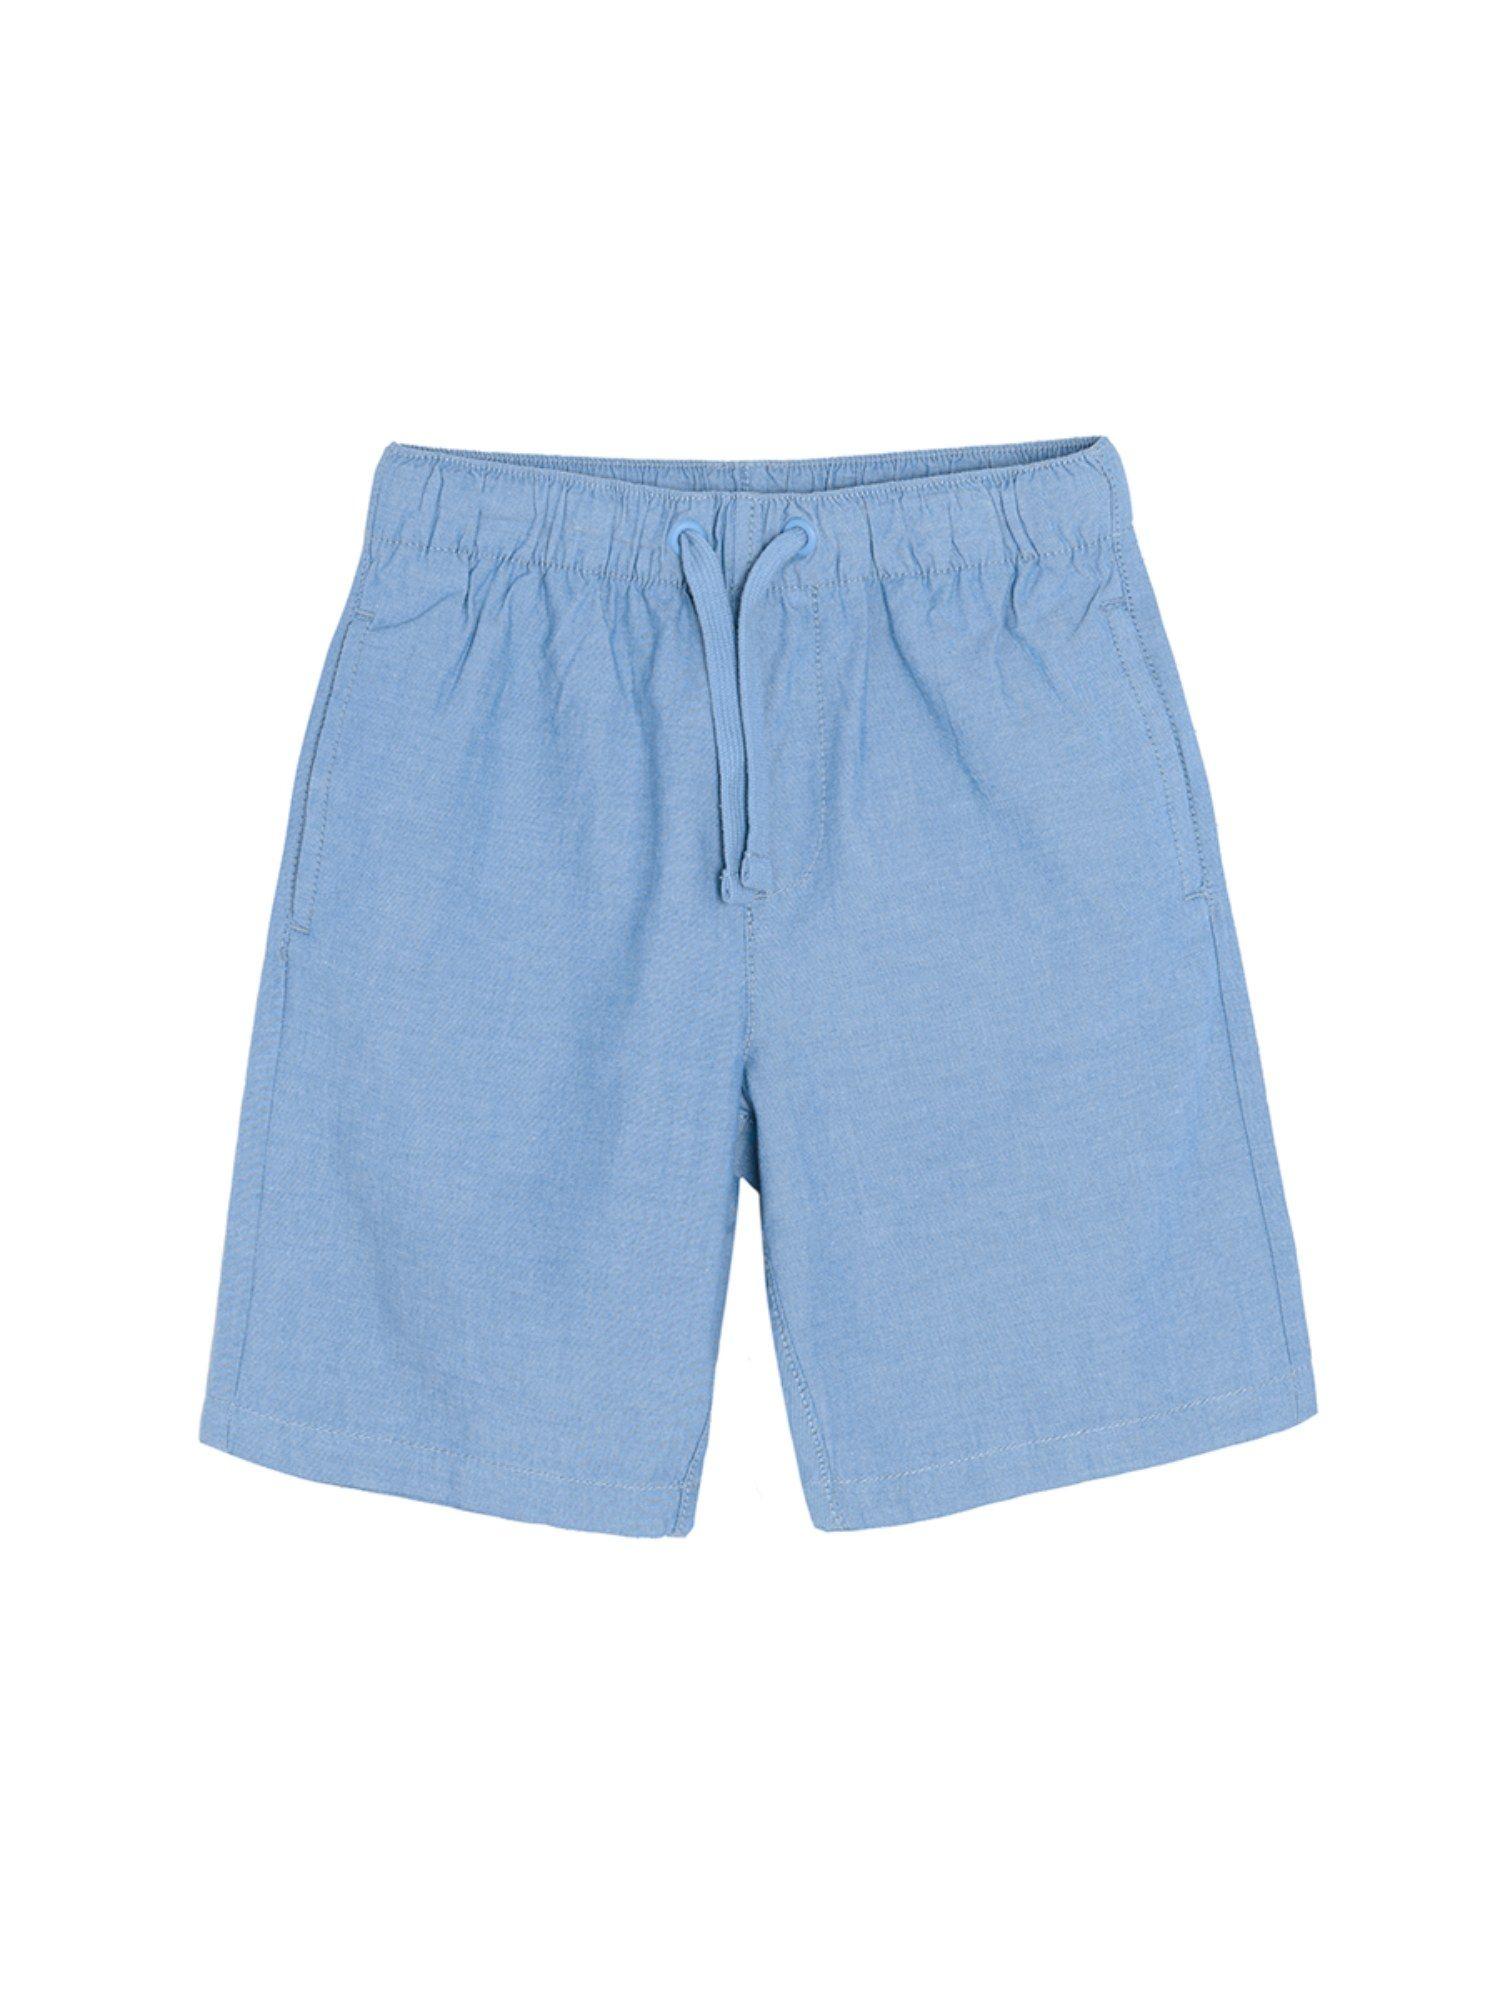 smyk boys blue solid shorts